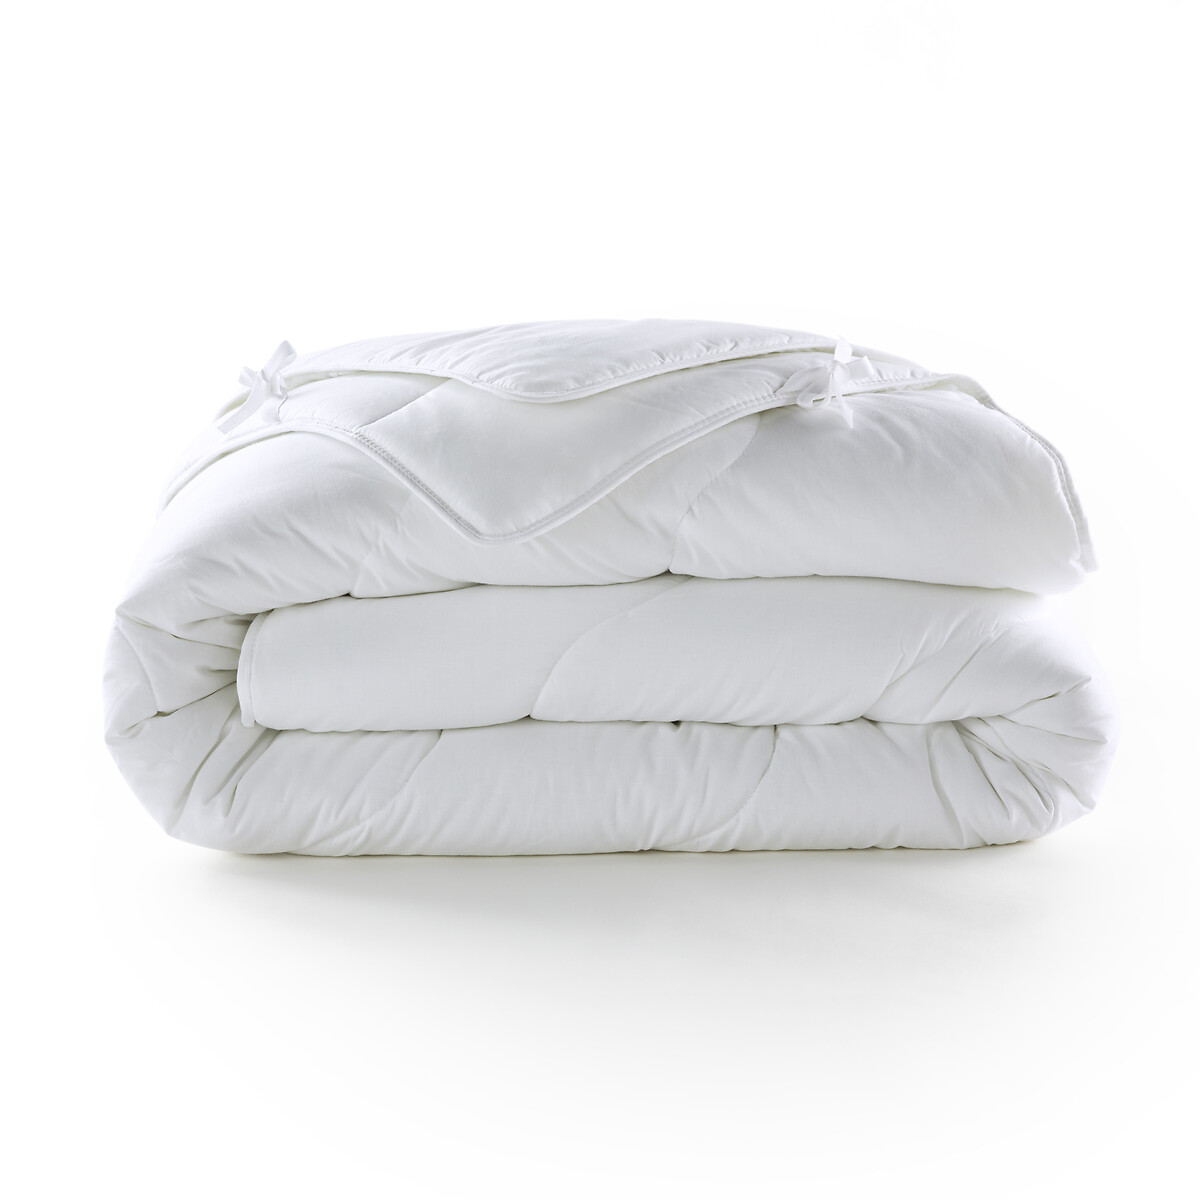 Одеяло La Redoute Двойное  гм   гм с обработкойProneem 260 x 240 см белый, размер 260 x 240 см - фото 2